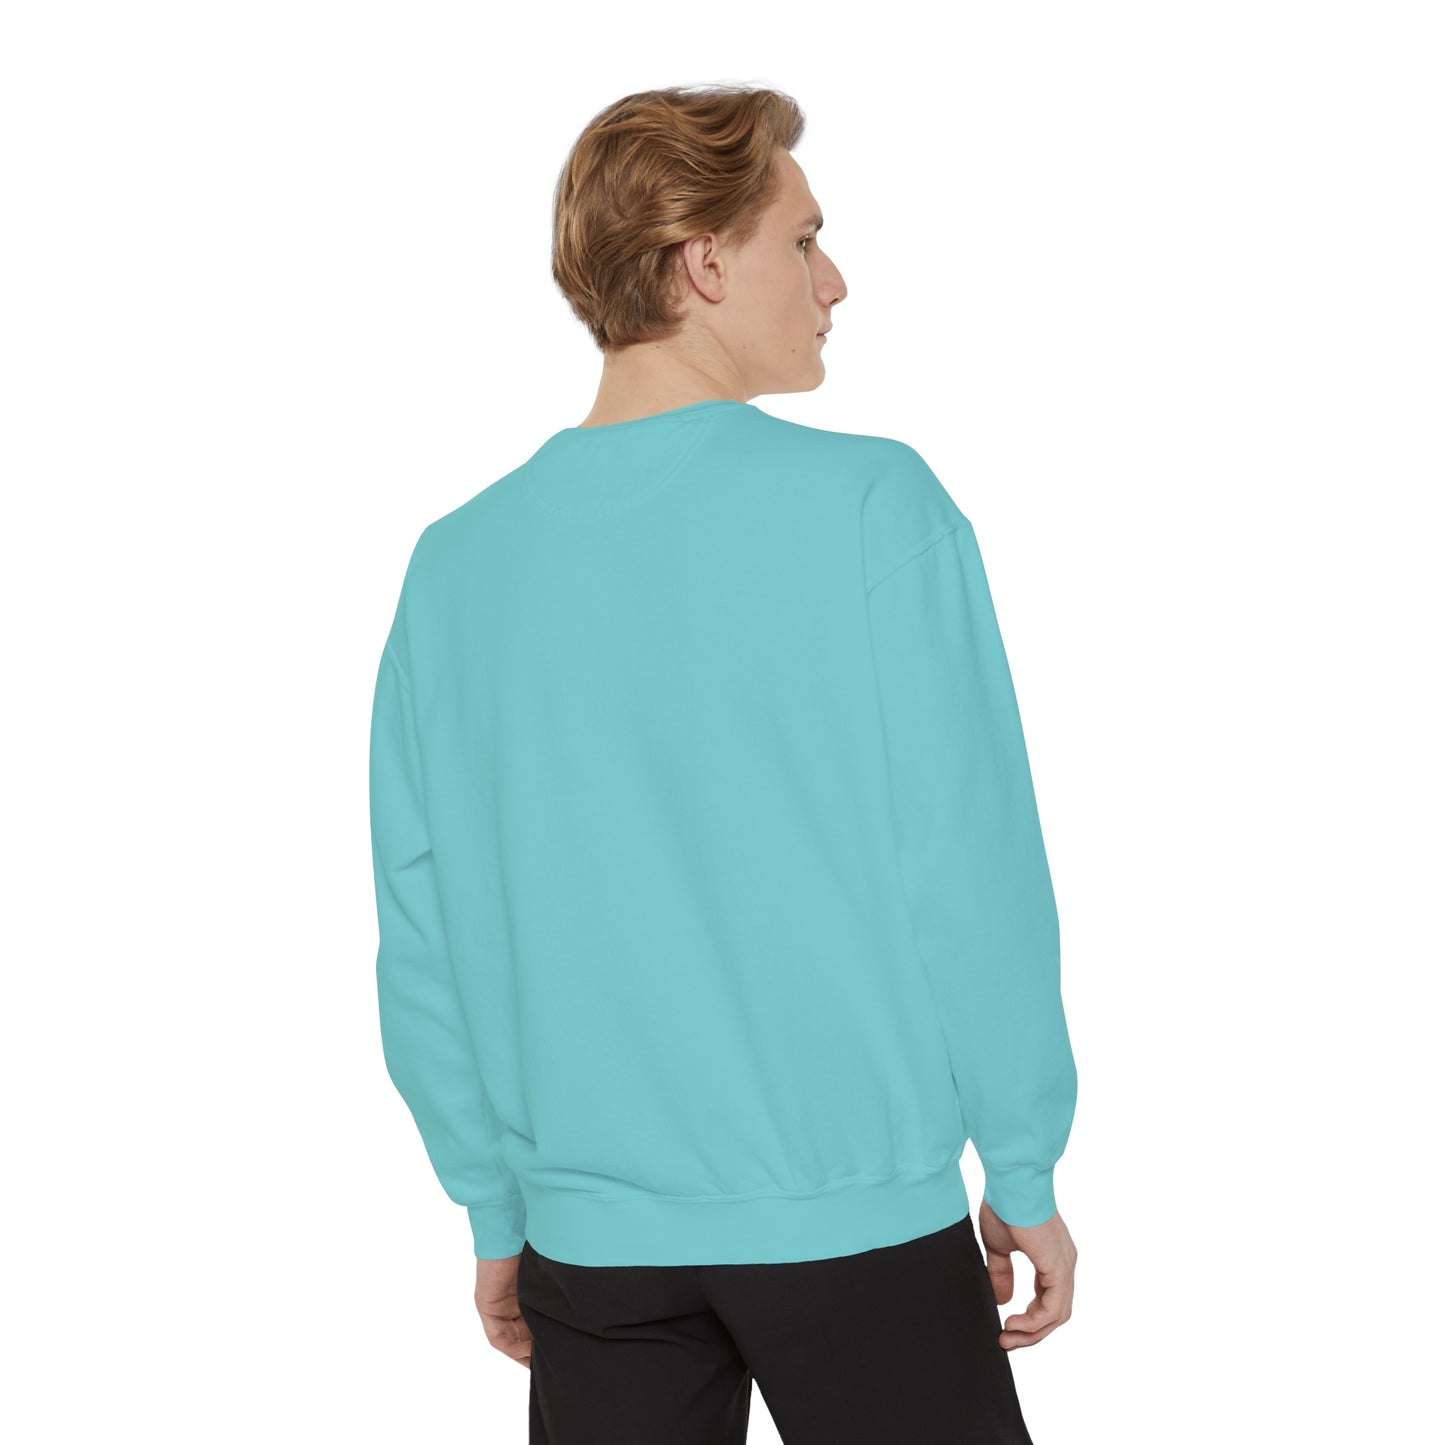 Local Script Unisex Garment-Dyed Sweatshirt